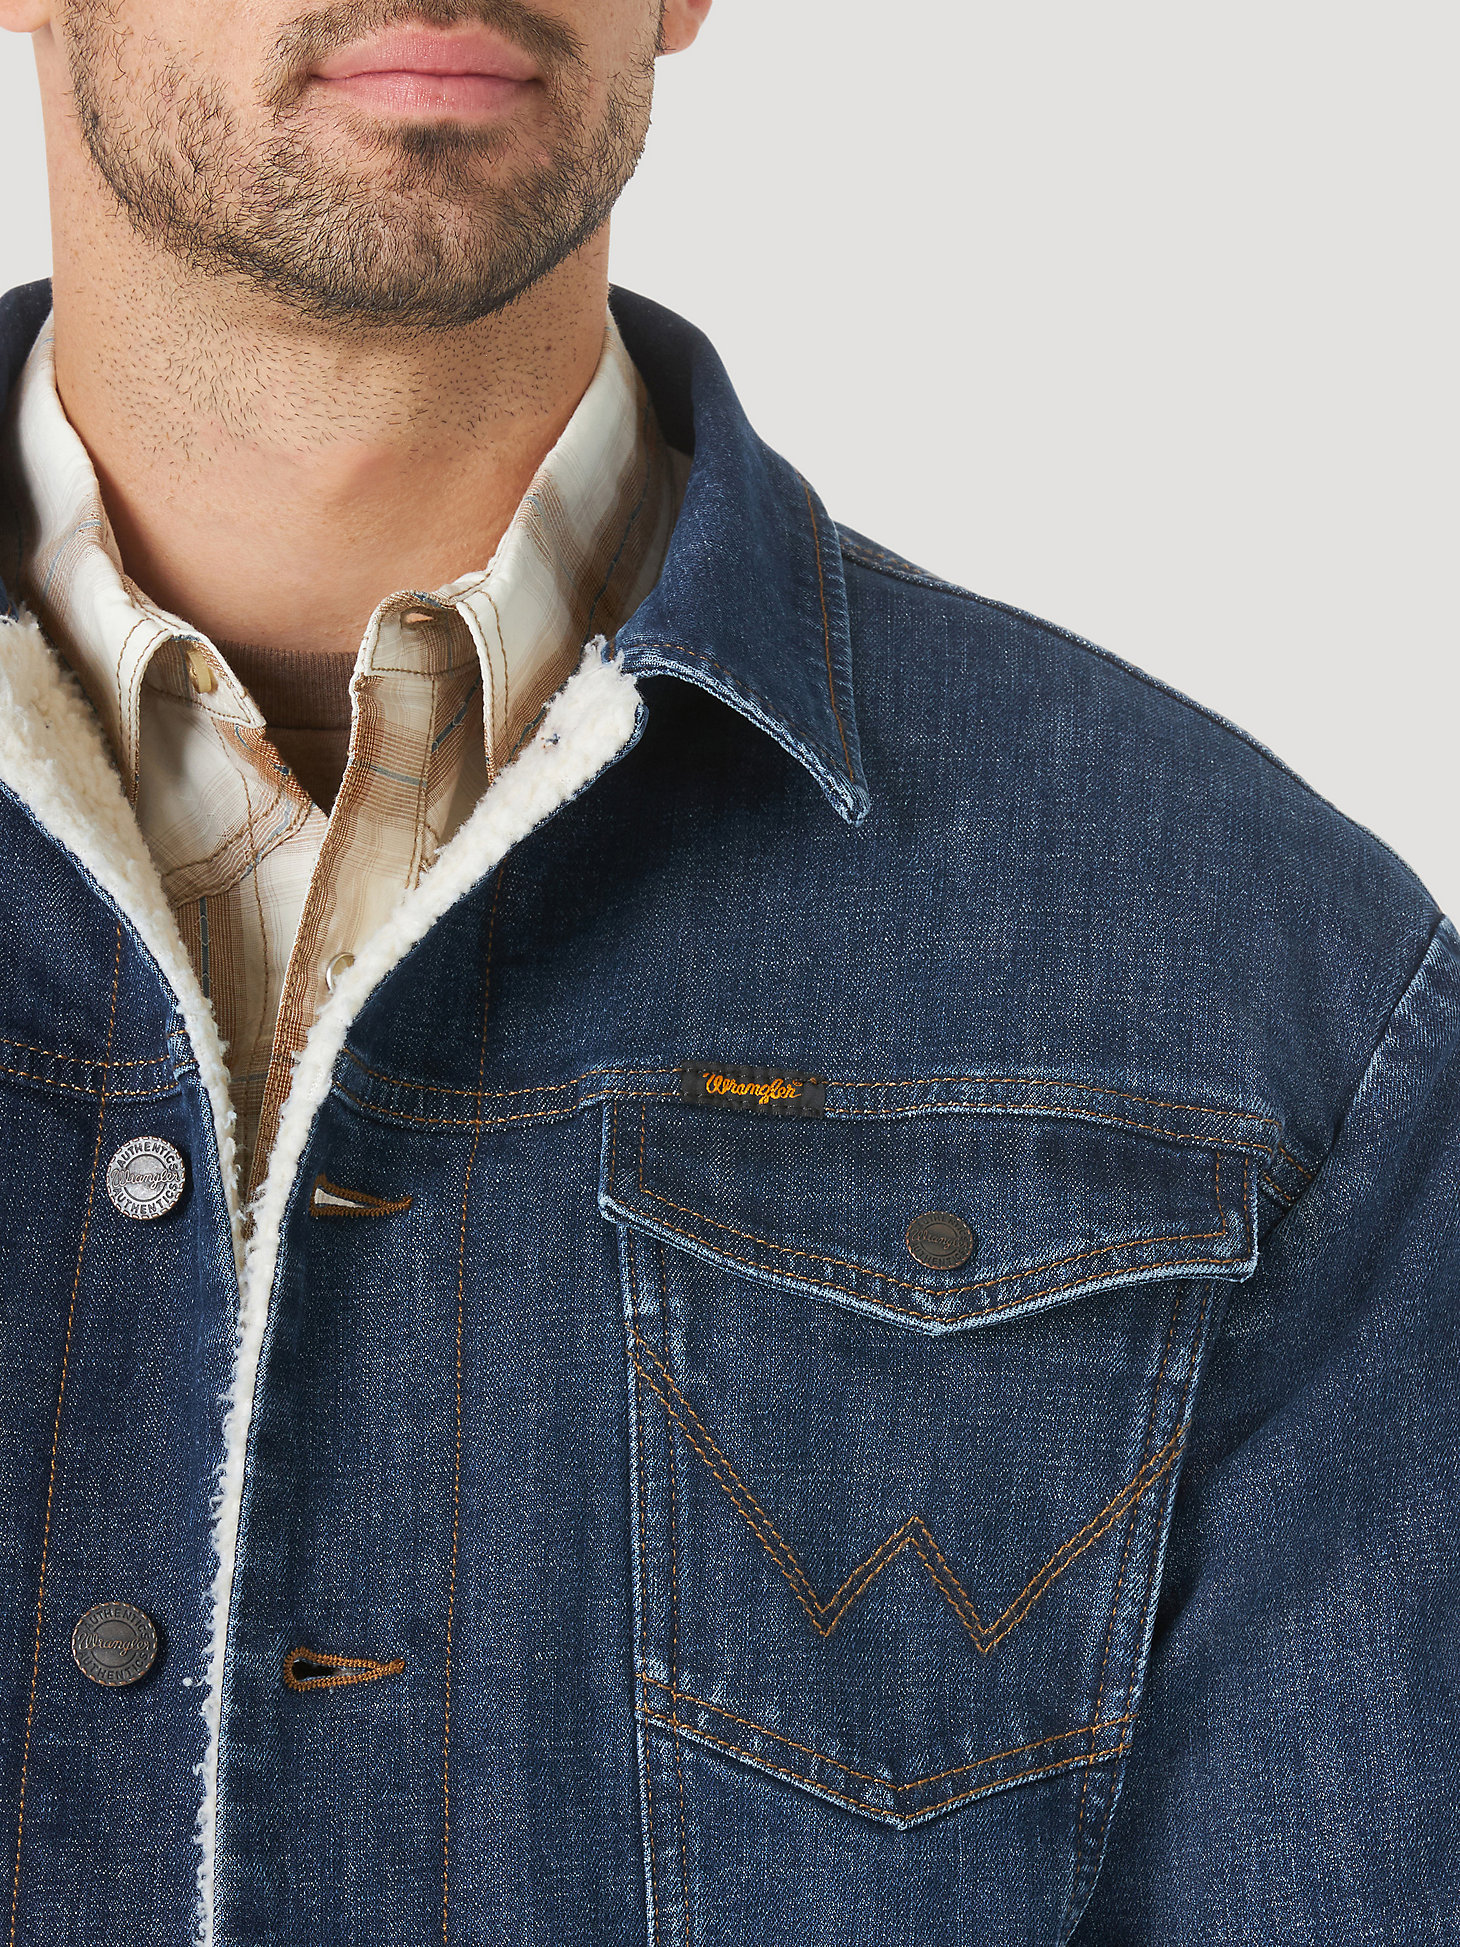 Details about   Wrangler Men's Retro Unlined Stretch Denim Jacket 